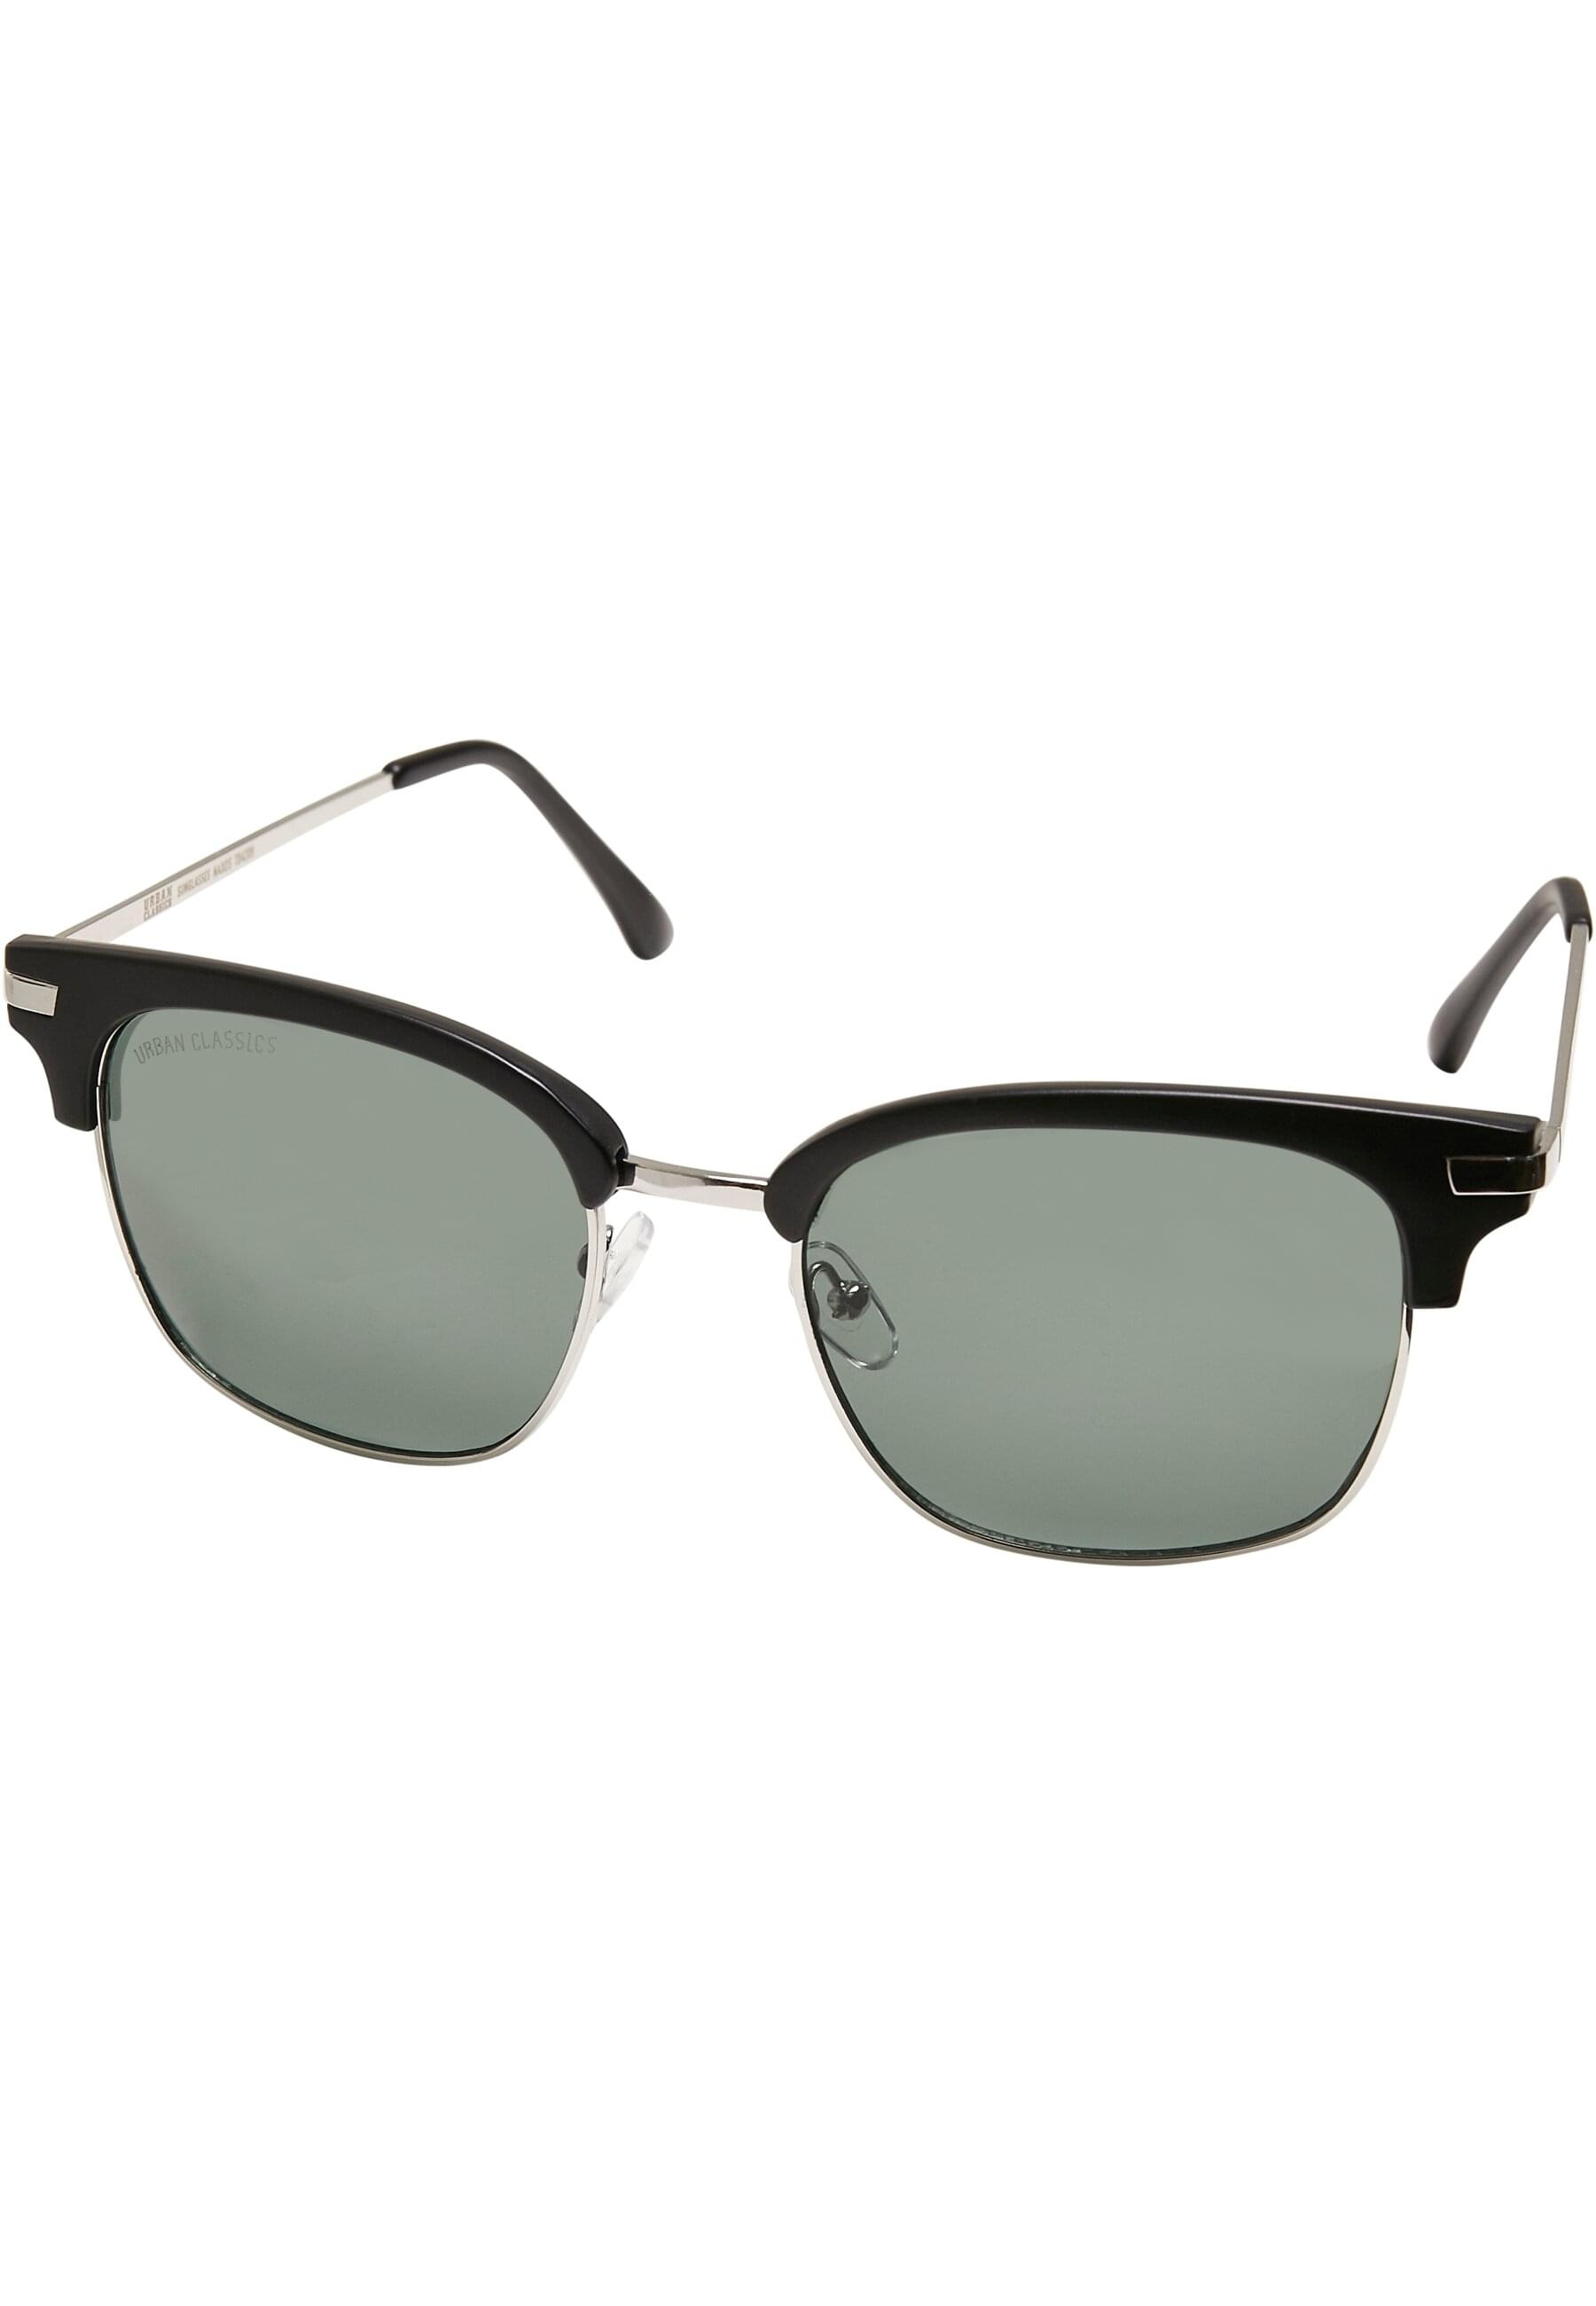 With | »Unisex CLASSICS I\'m kaufen Crete Chain« URBAN online Sunglasses Sonnenbrille walking